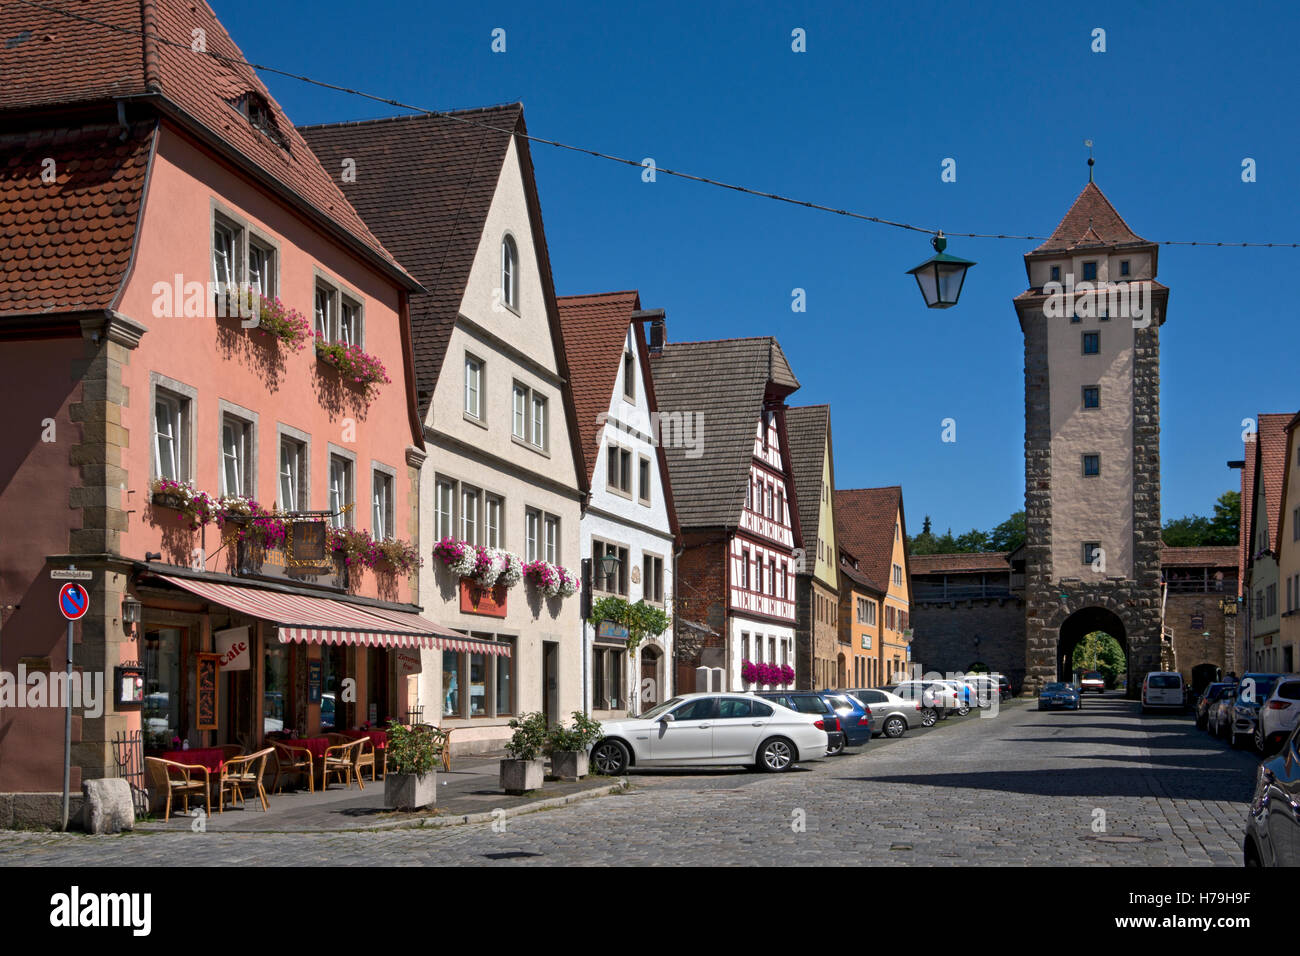 Scena di strada, pareti e gatehouse a Rothenburg ob der Tauber, città medievale, Baviera, Germania Foto Stock